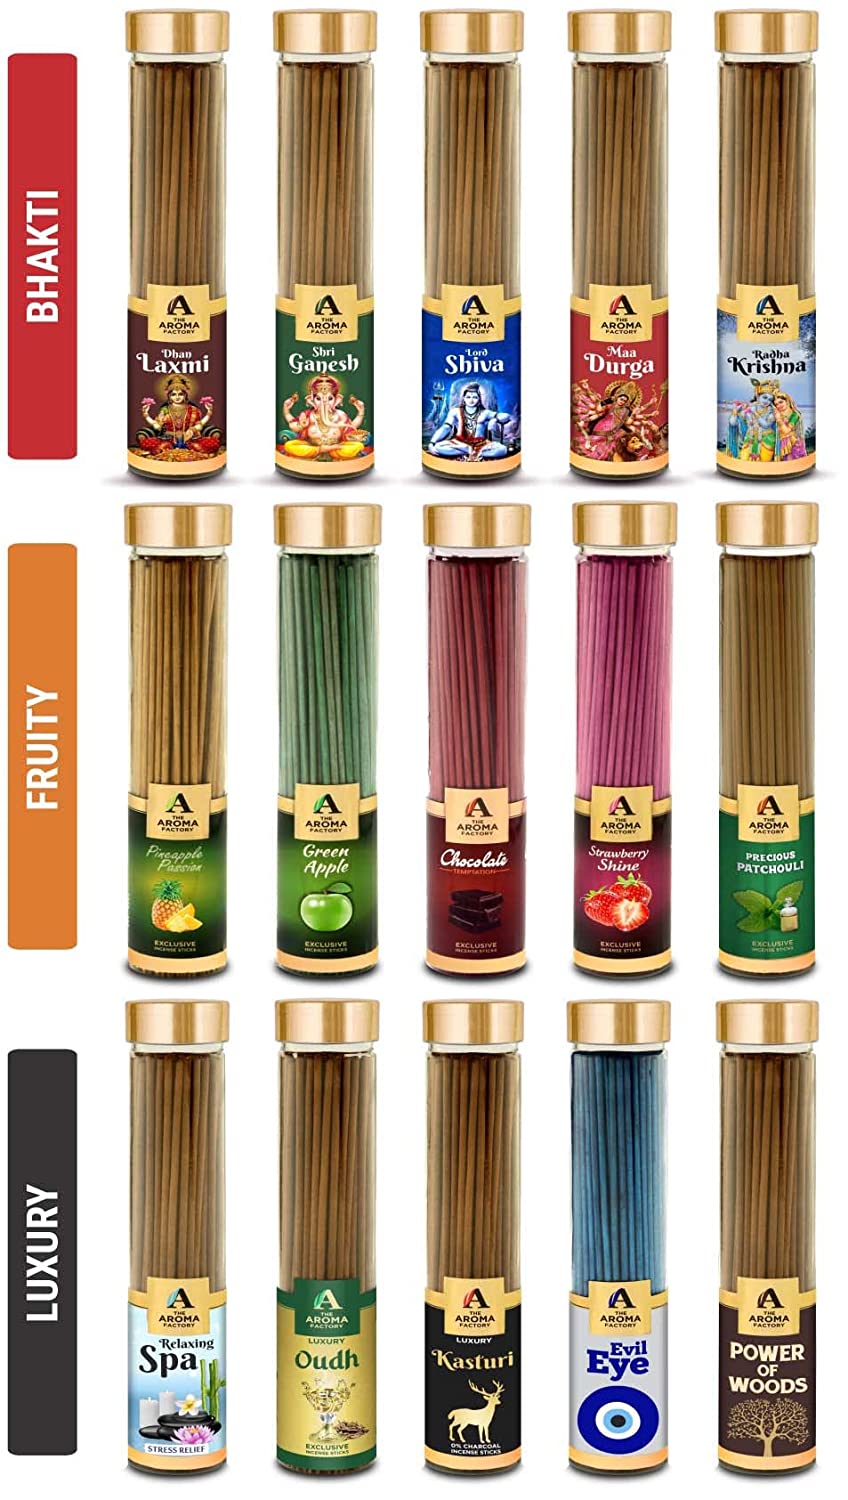 The Aroma Factory Agarbatti for Pooja, Shri Ganesh Incense Sticks, Charcoal Free & Low Smoke Agarbatti with Essential Oils & Natural Fragrance, 100g X 1 Bottle